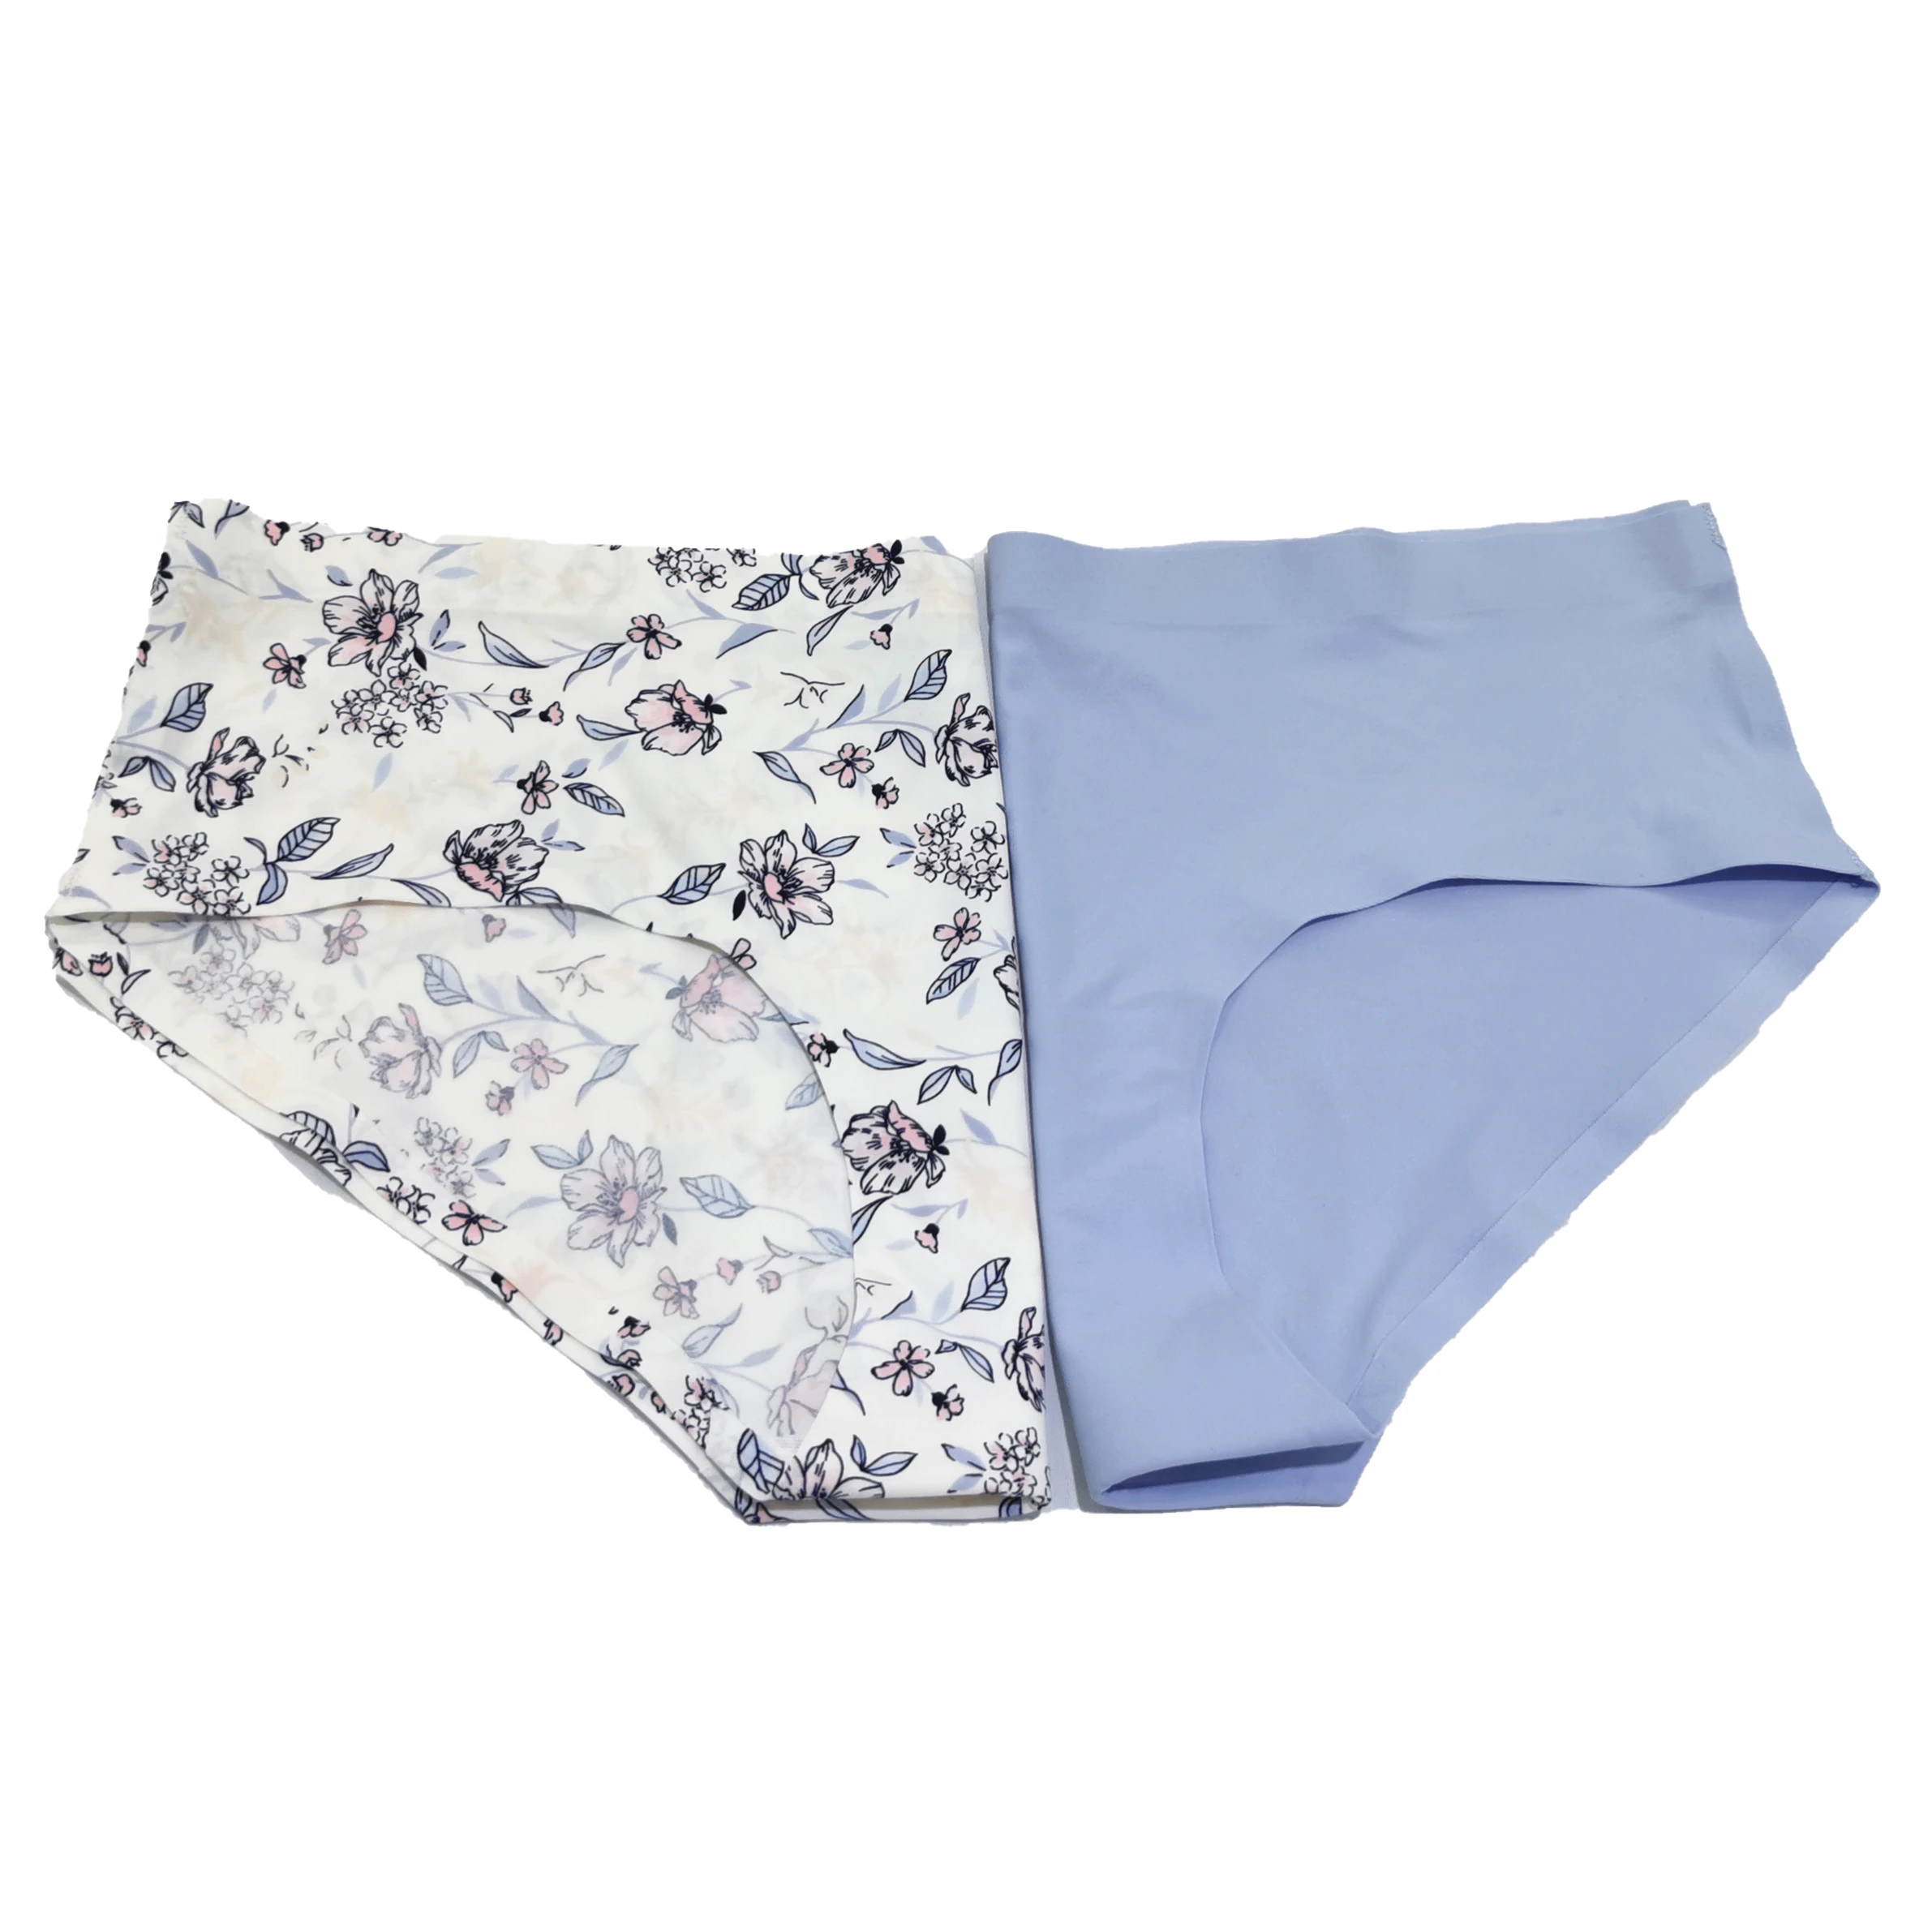 Seamless Printing  panties comfortable fashionable sexy womens underwear